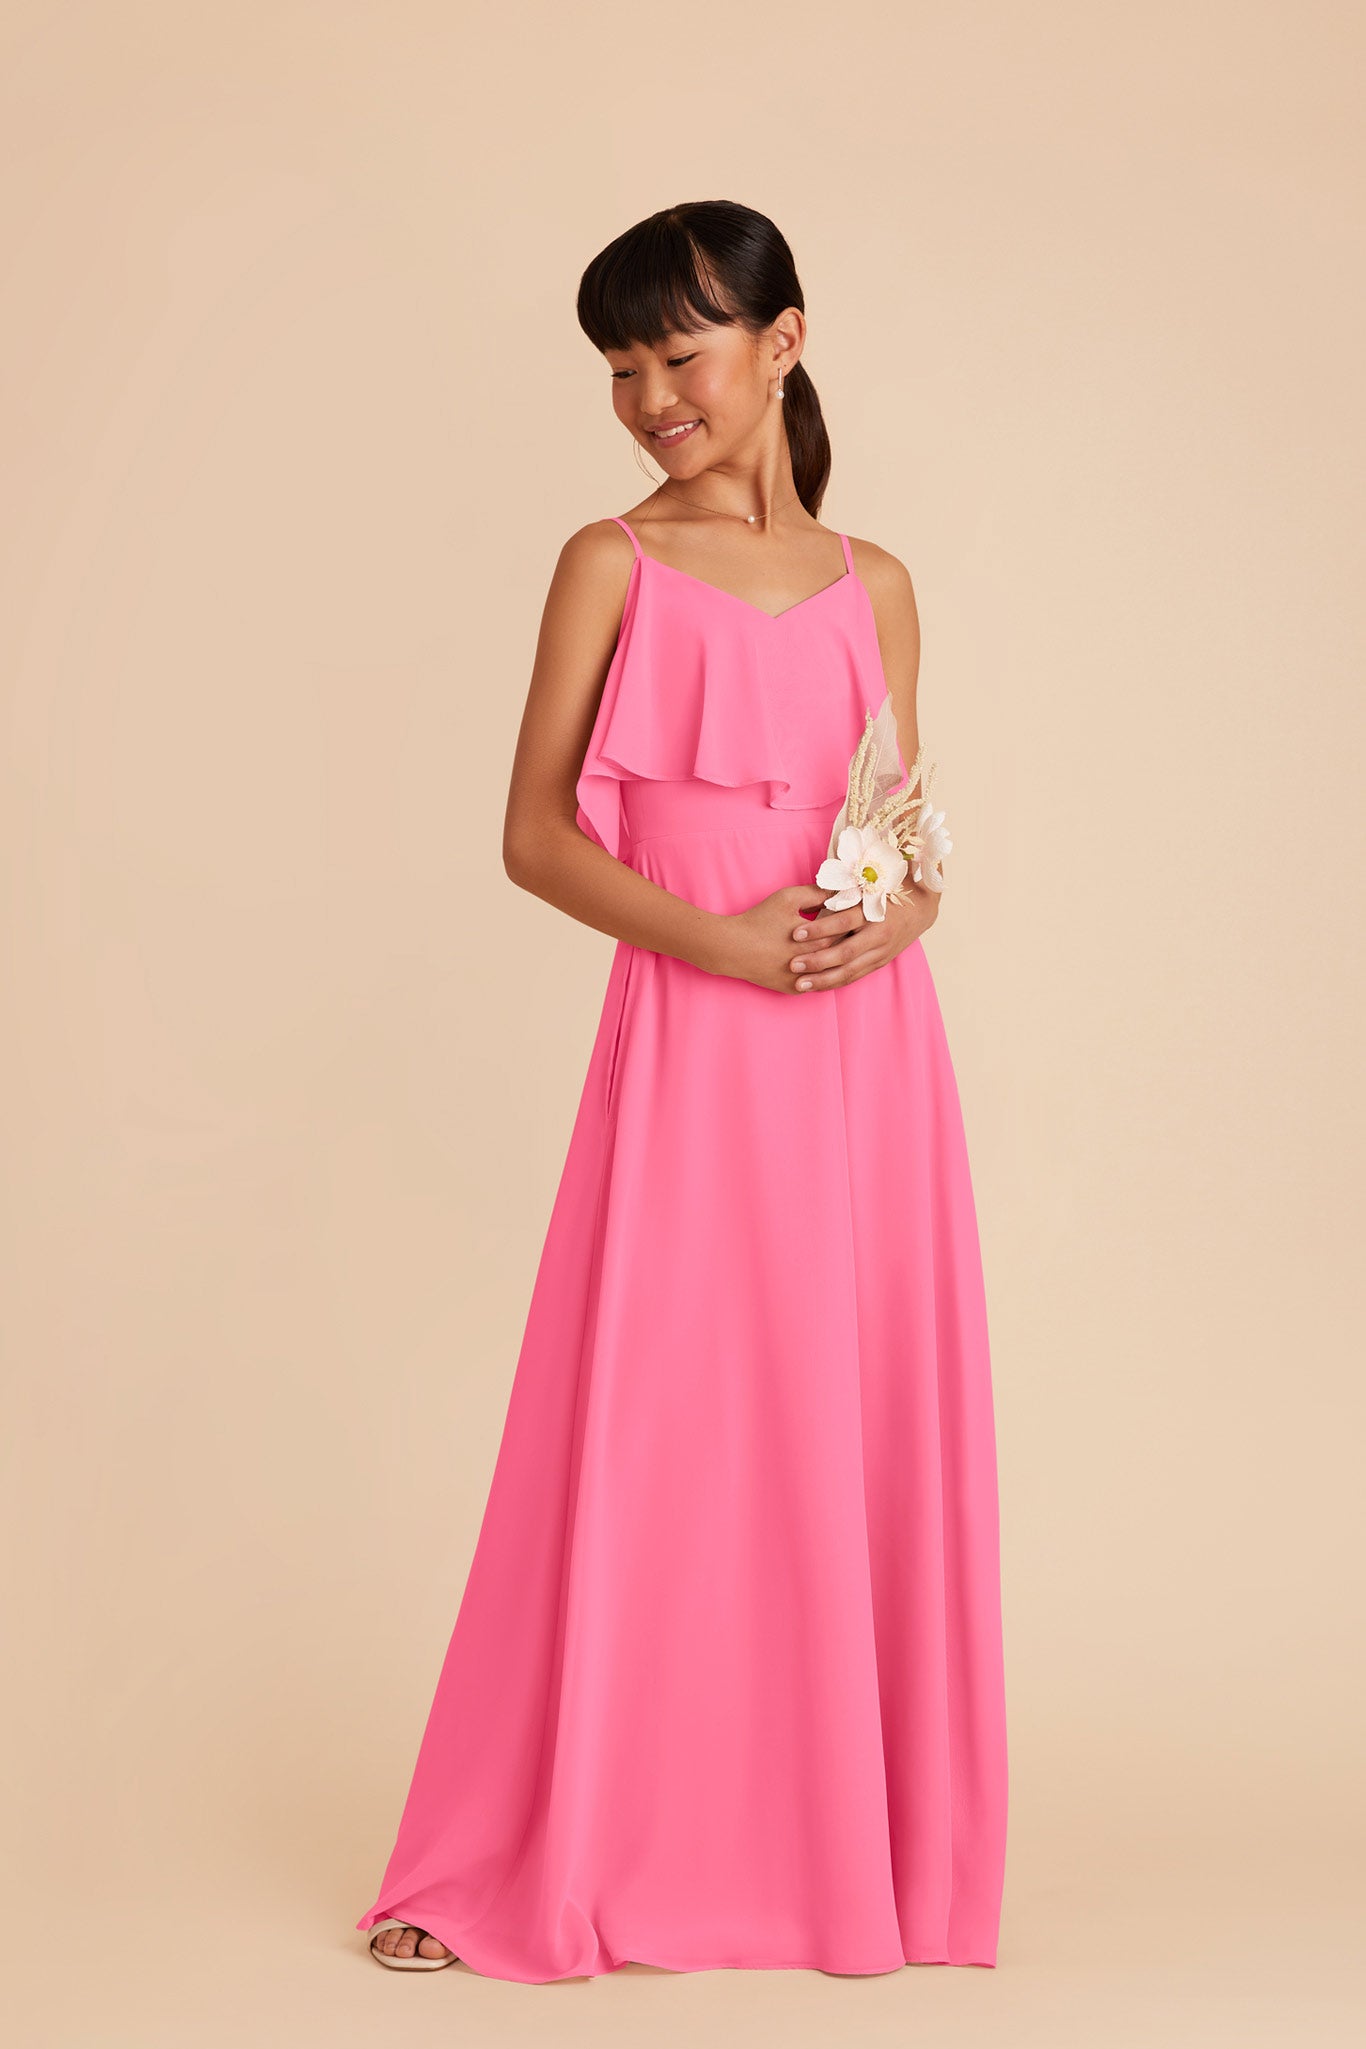 Bon Bon Pink Janie Convertible Junior Dress by Birdy Grey